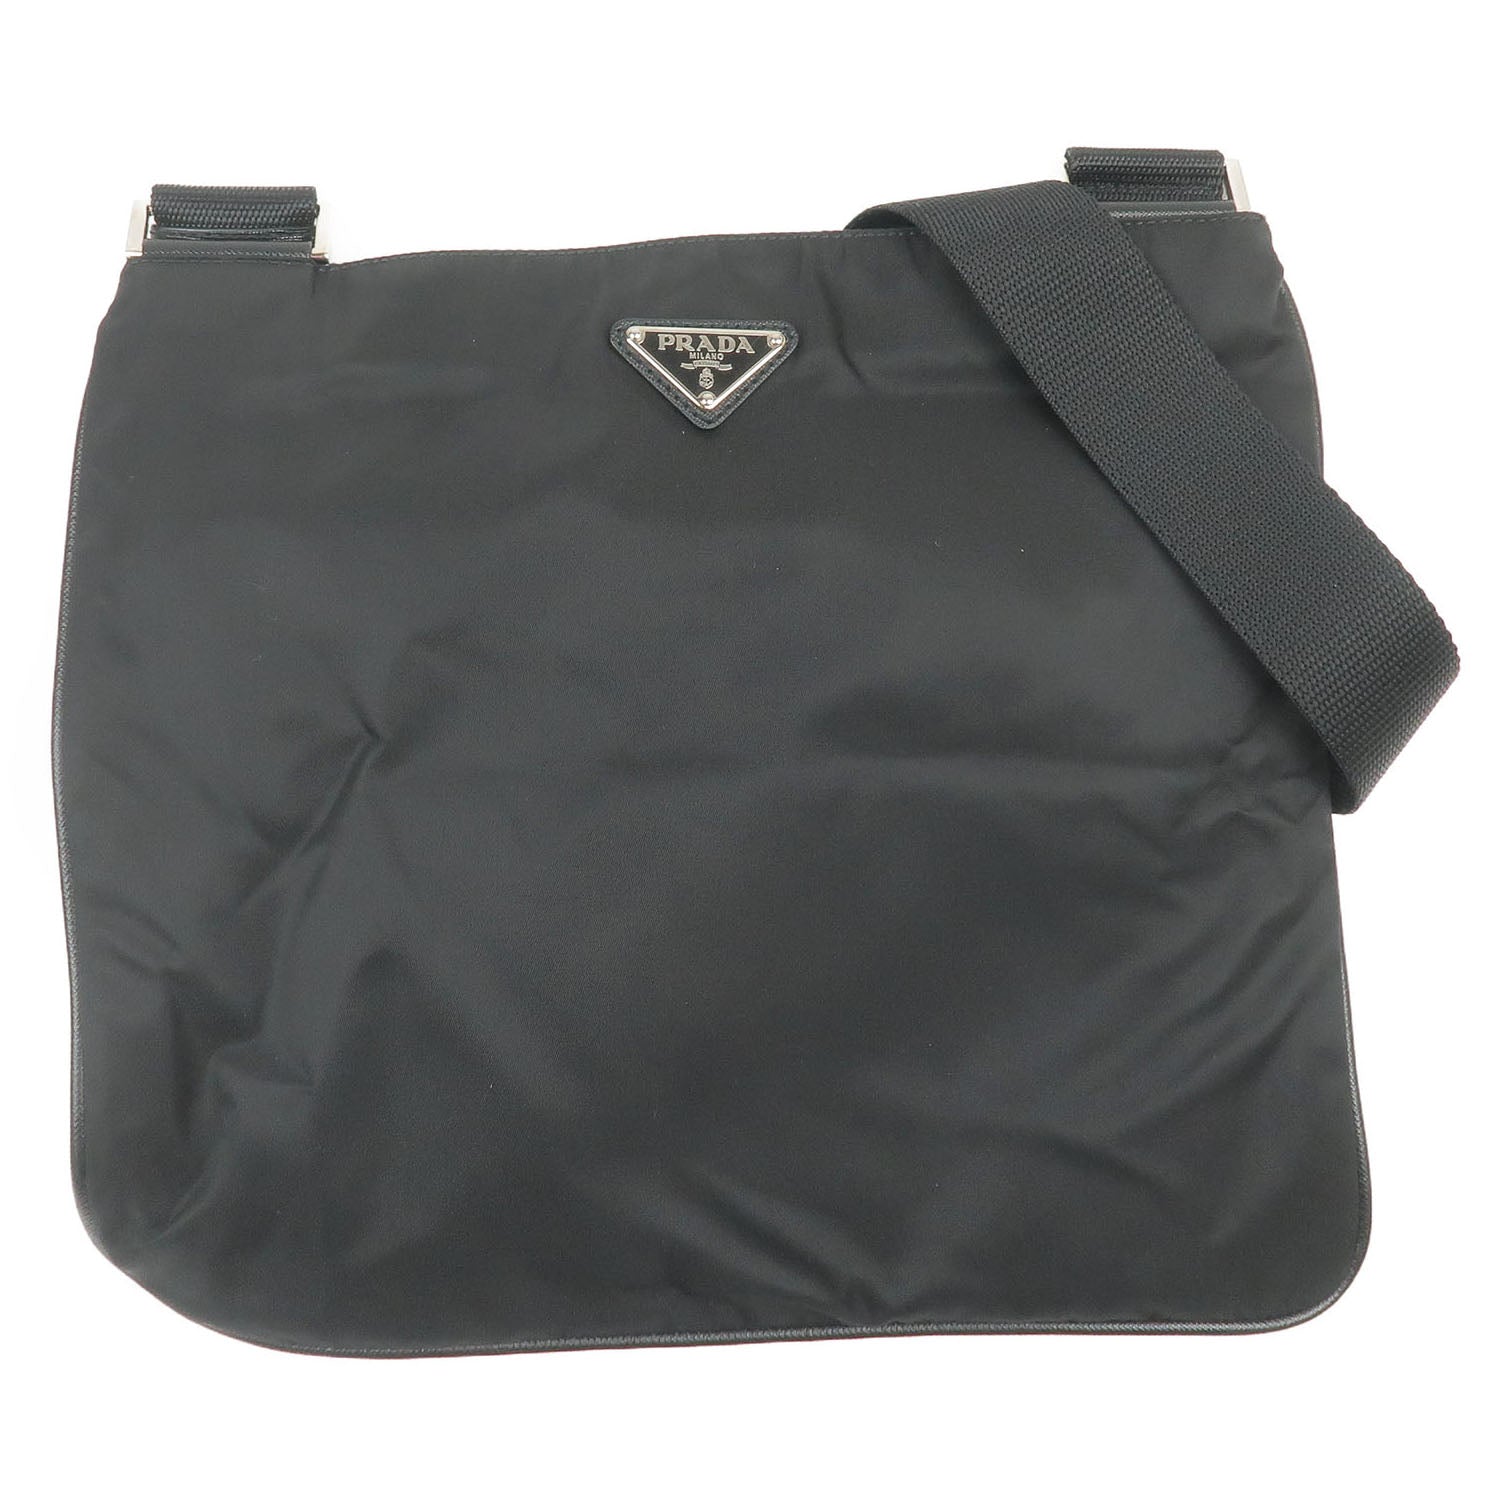 PRADA-Nylon-Leather-Shoulder-Bag-NERO-Black-VA0053